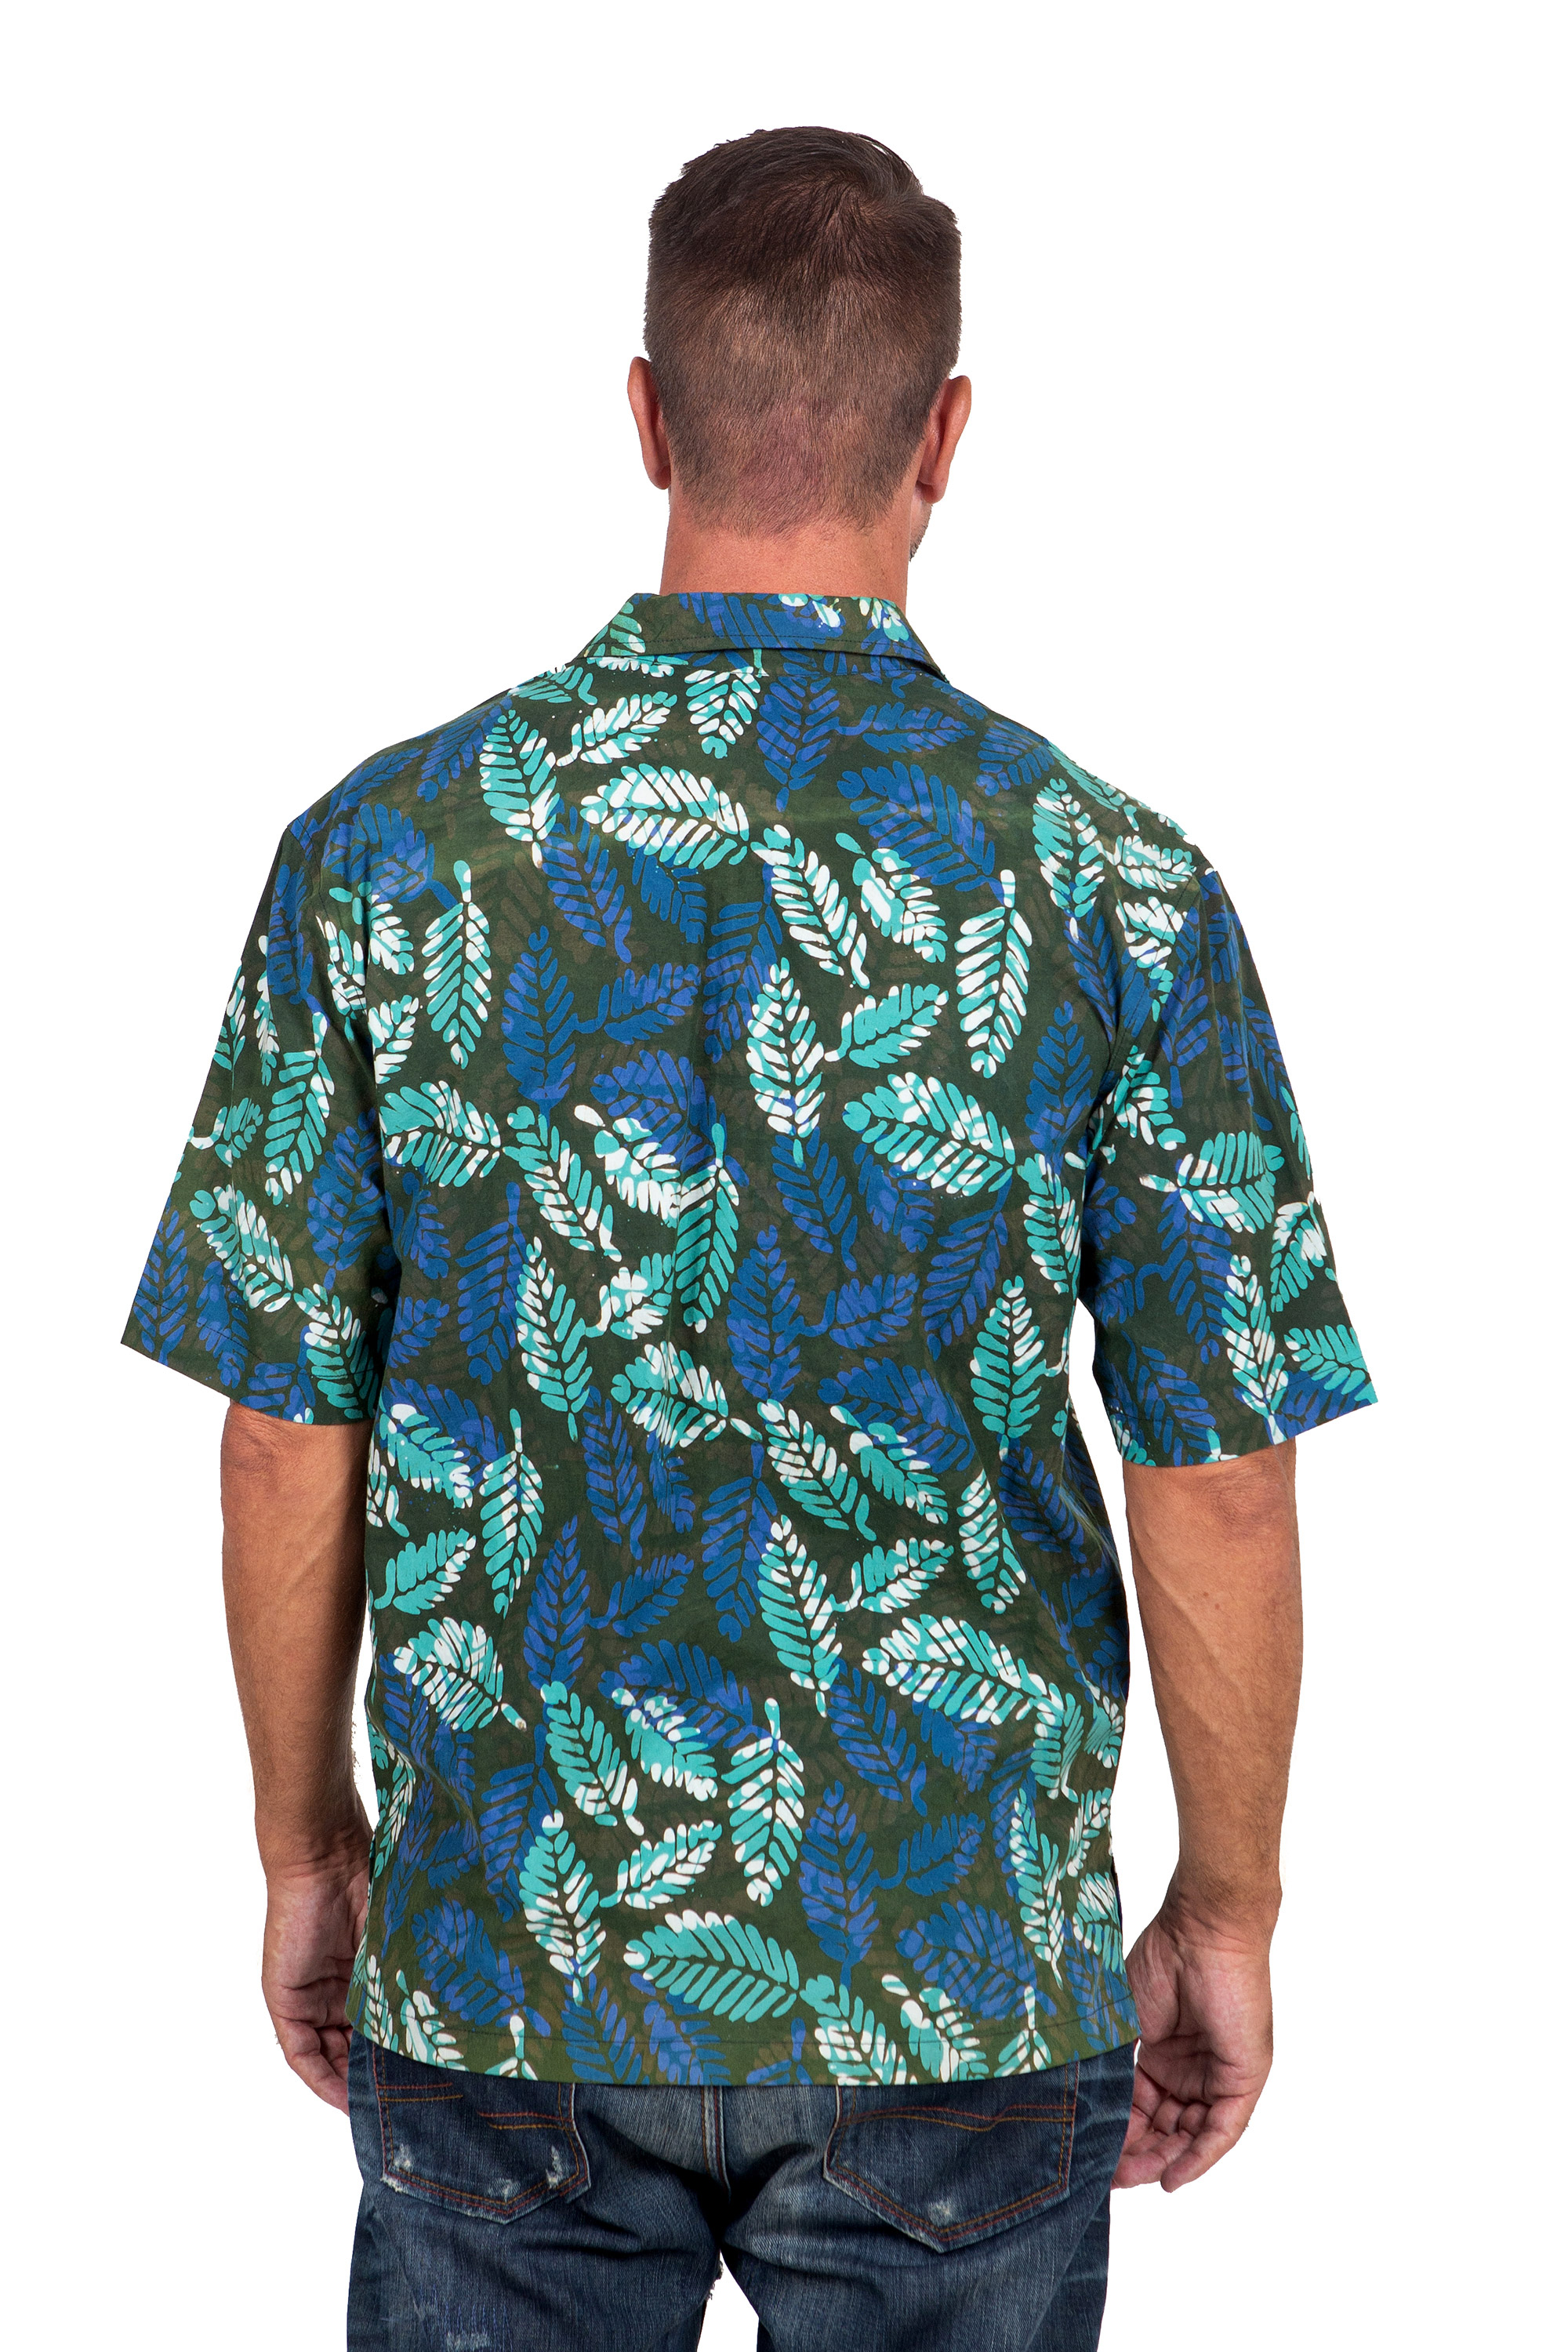 Men's Short-Sleeved Green Cotton Batik Shirt from Bali - Green Leaf ...